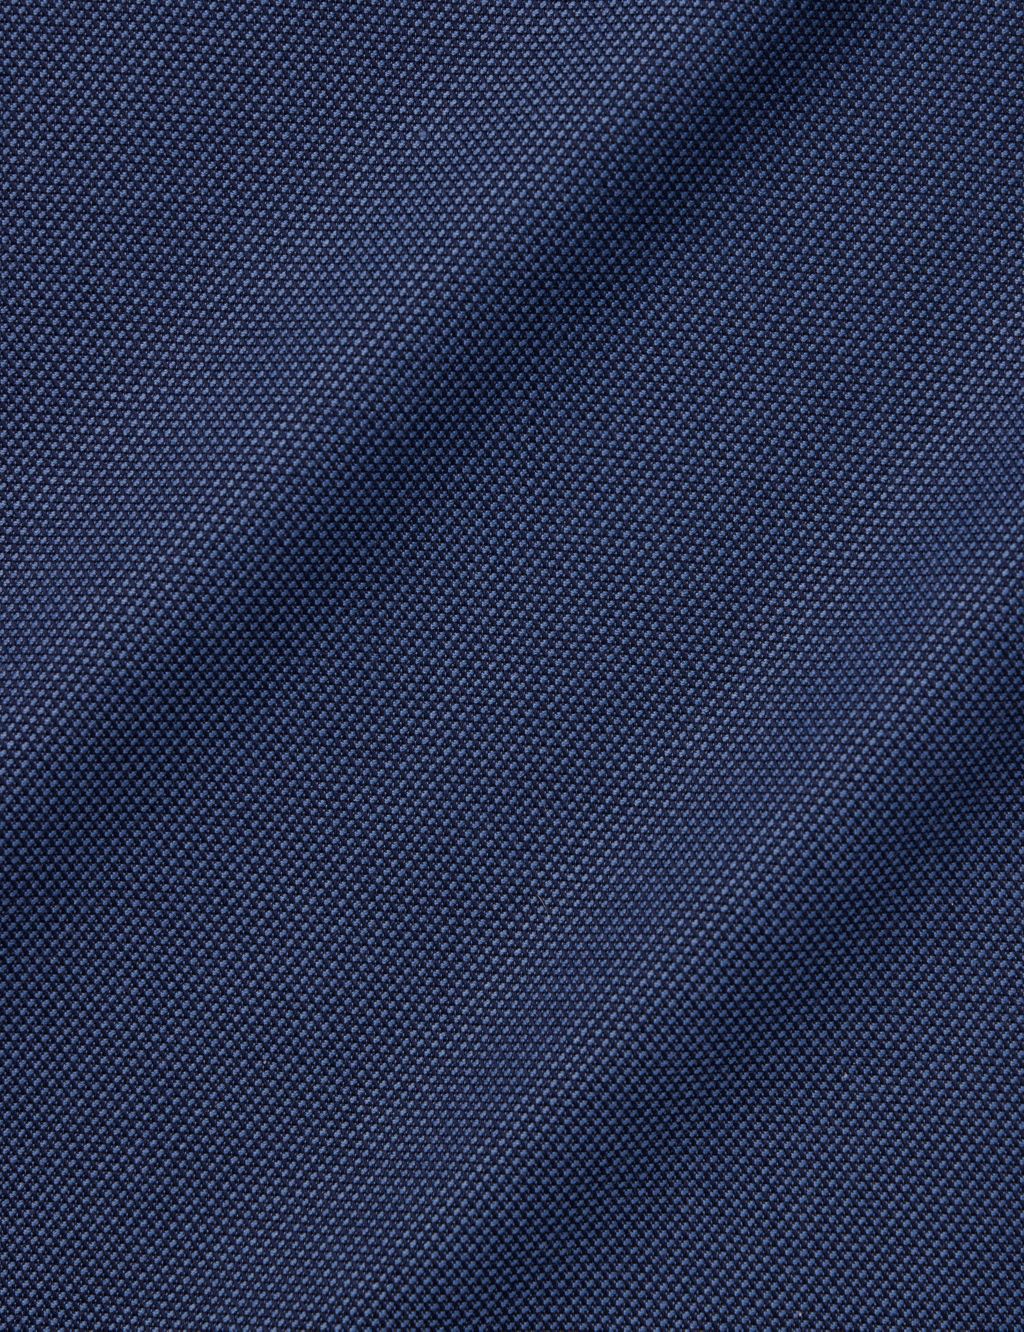 Slim Fit Non Iron Pure Cotton Oxford Shirt image 5